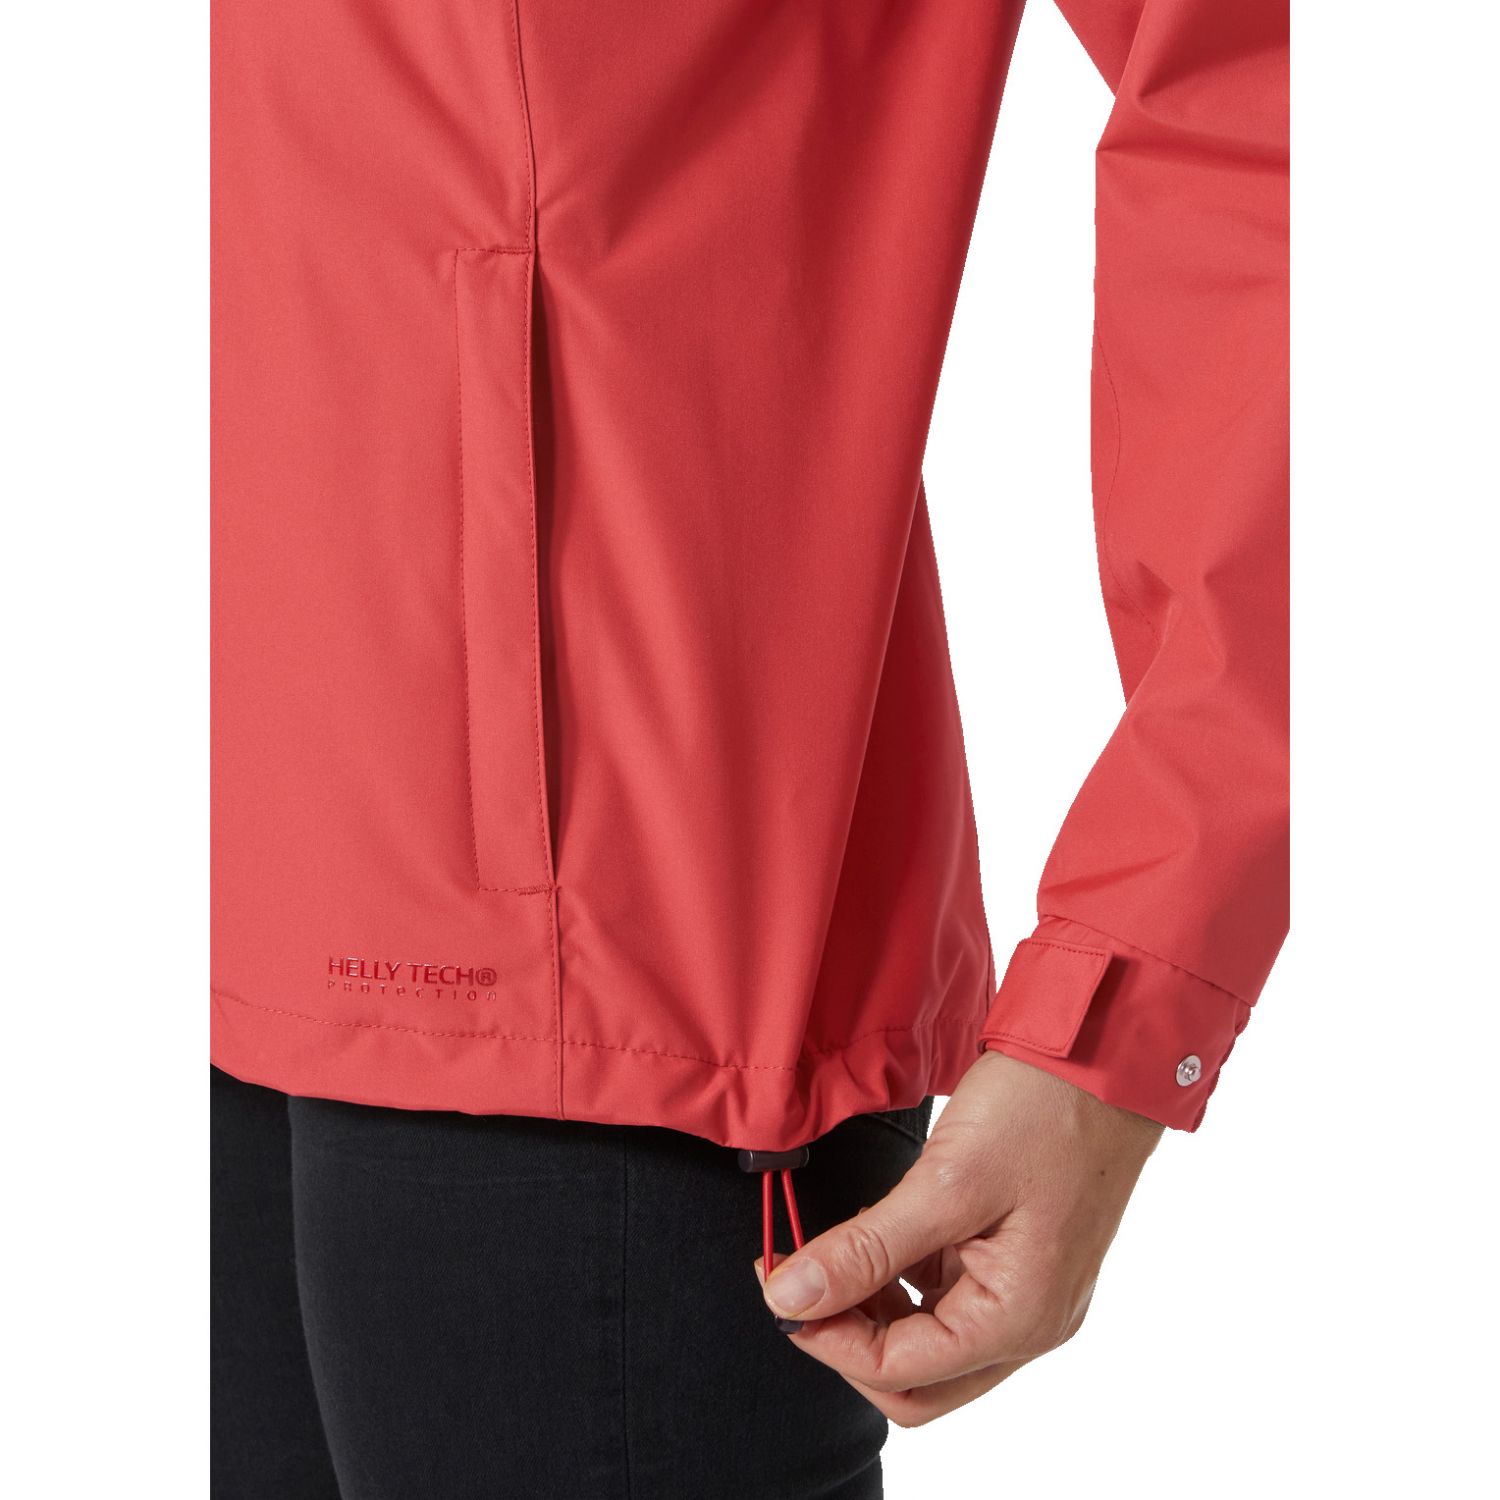 Helly Hansen Aden, rain jacket, women, poppy red